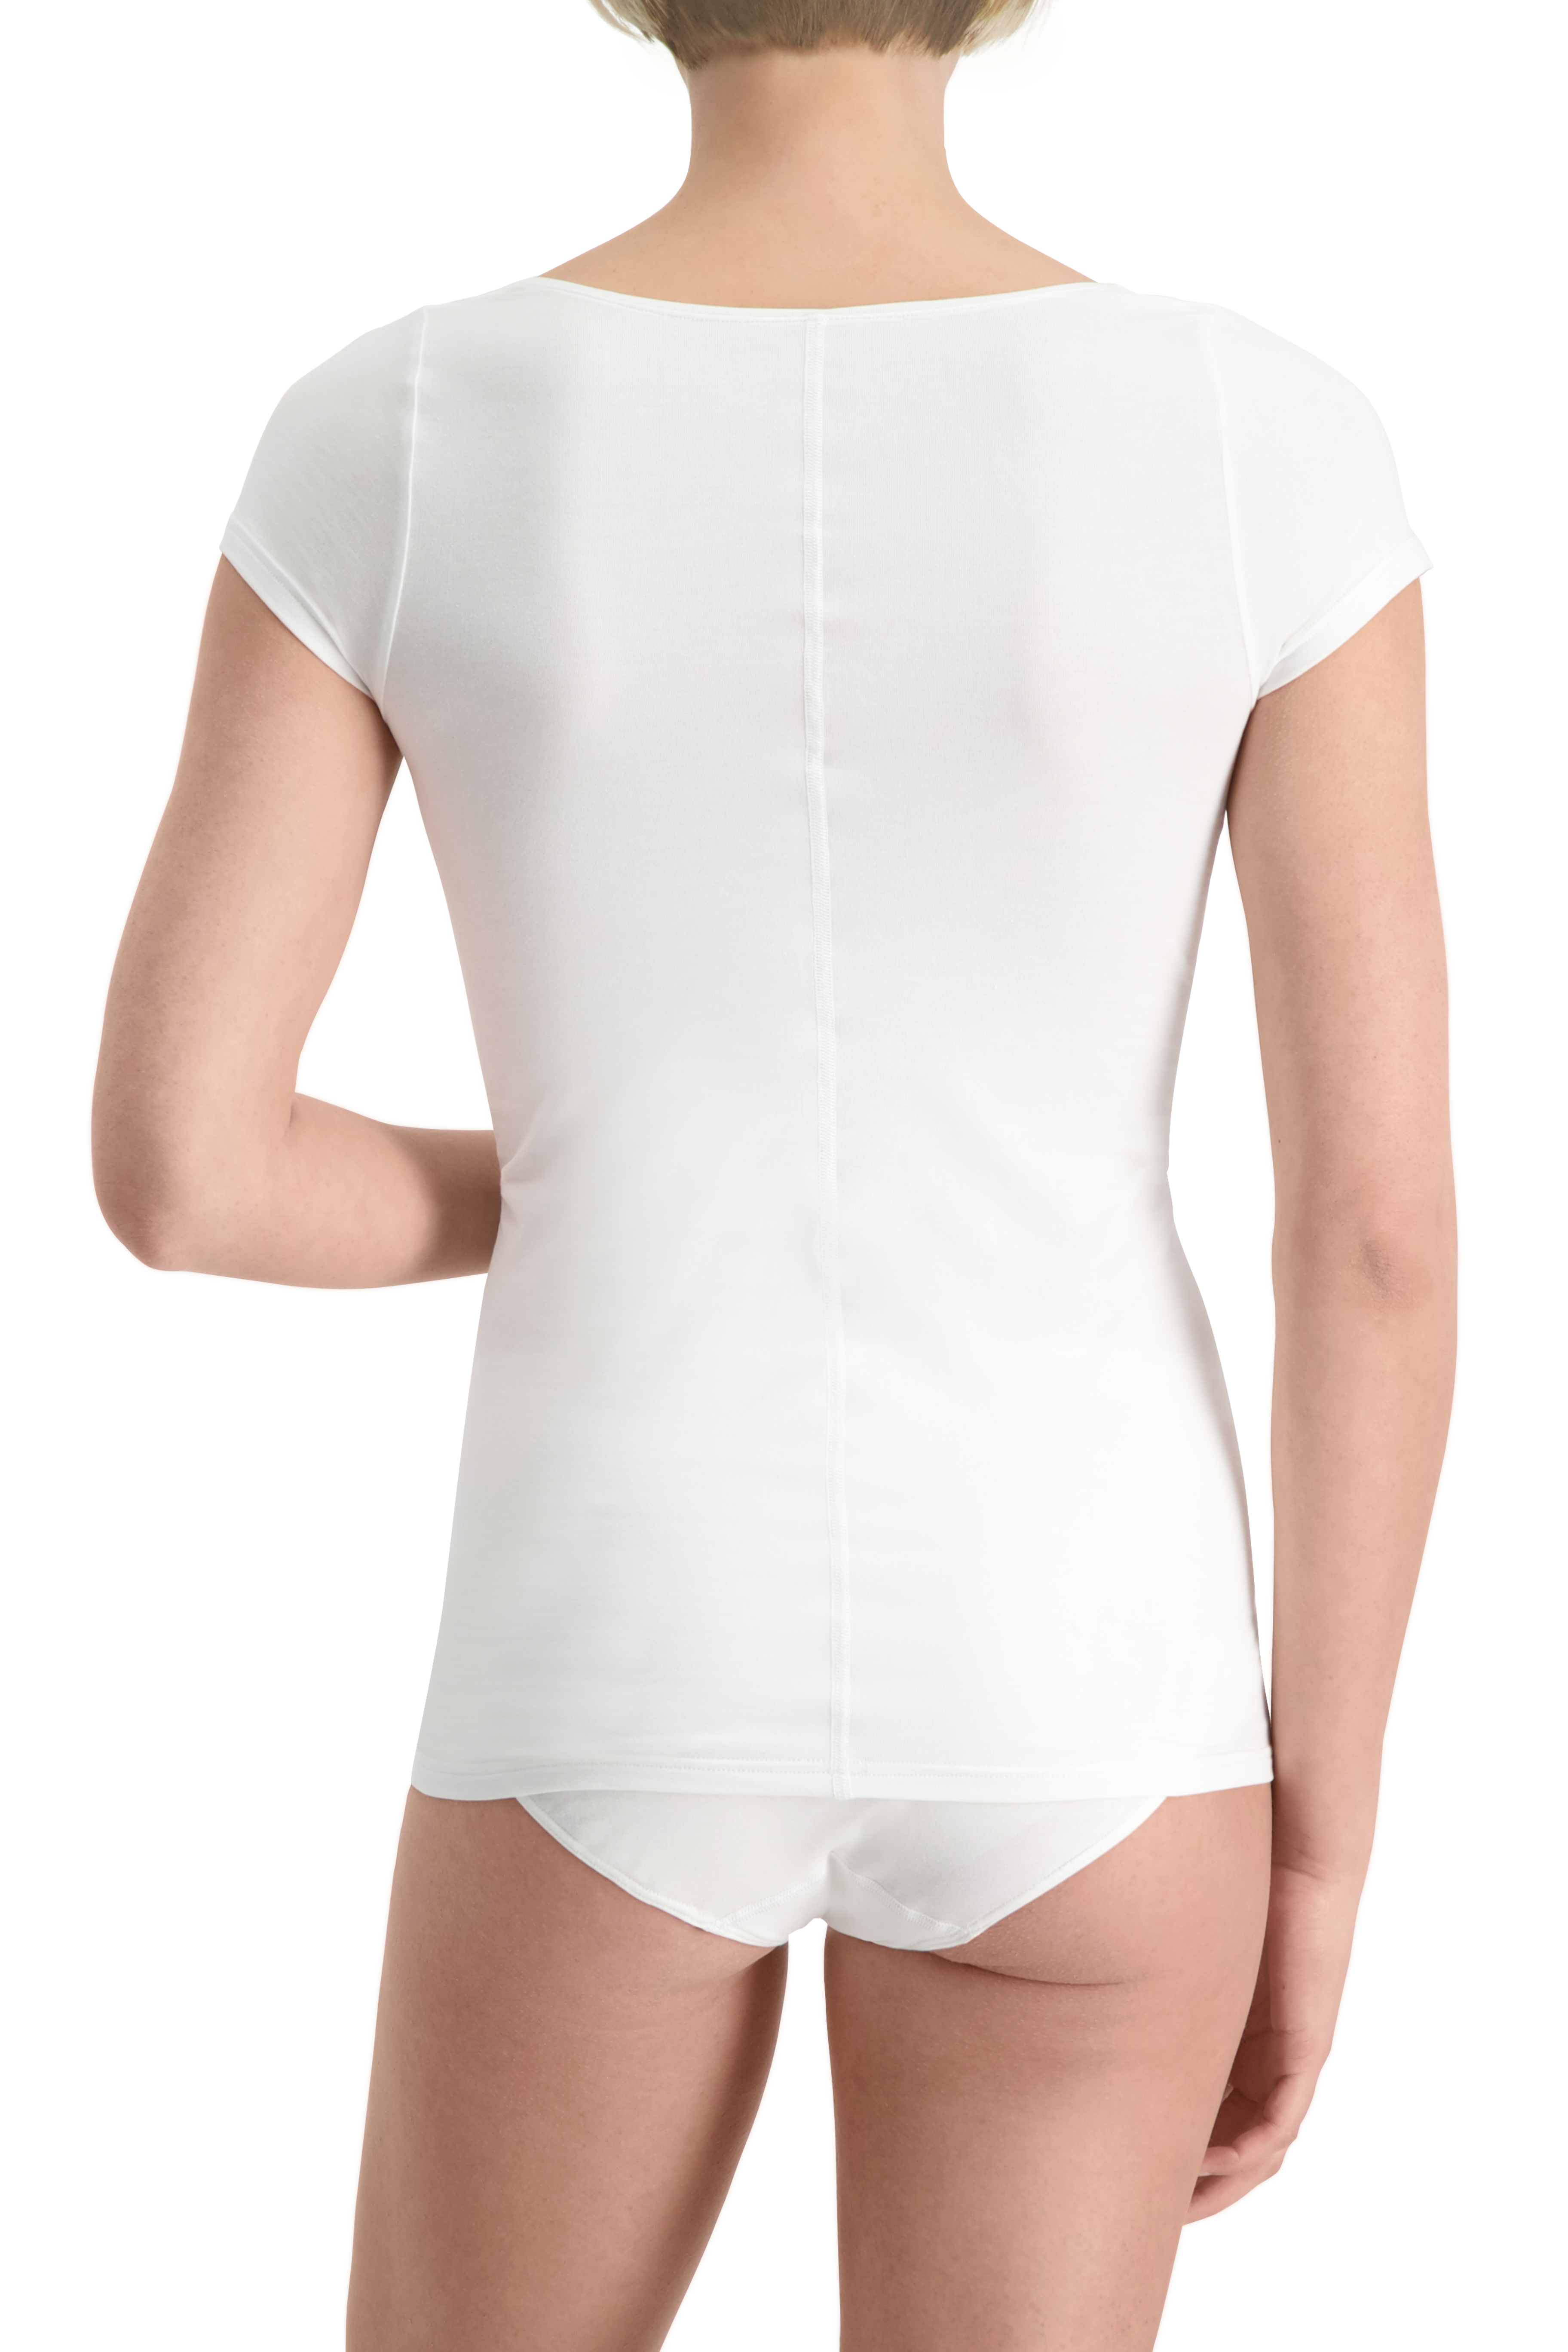 Invisible short sleeve undershirt for women - Noshirt